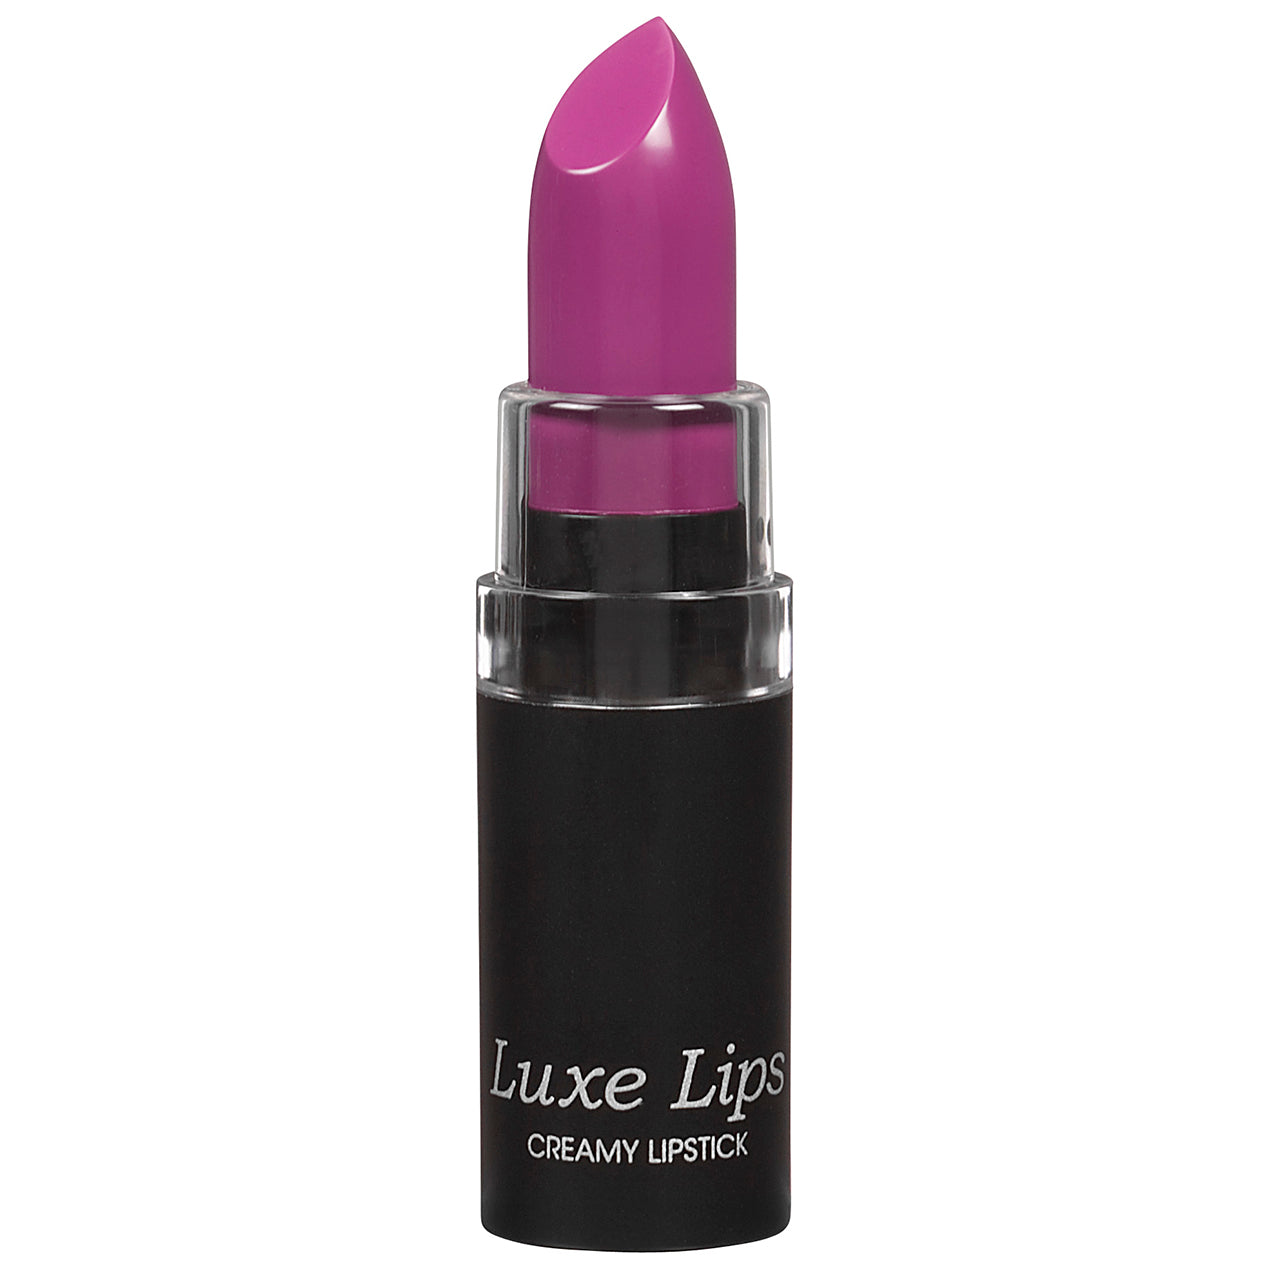 Styli-Style Cosmetics Luxe Lips Creamy Lipstick - It Girl - ADDROS.COM